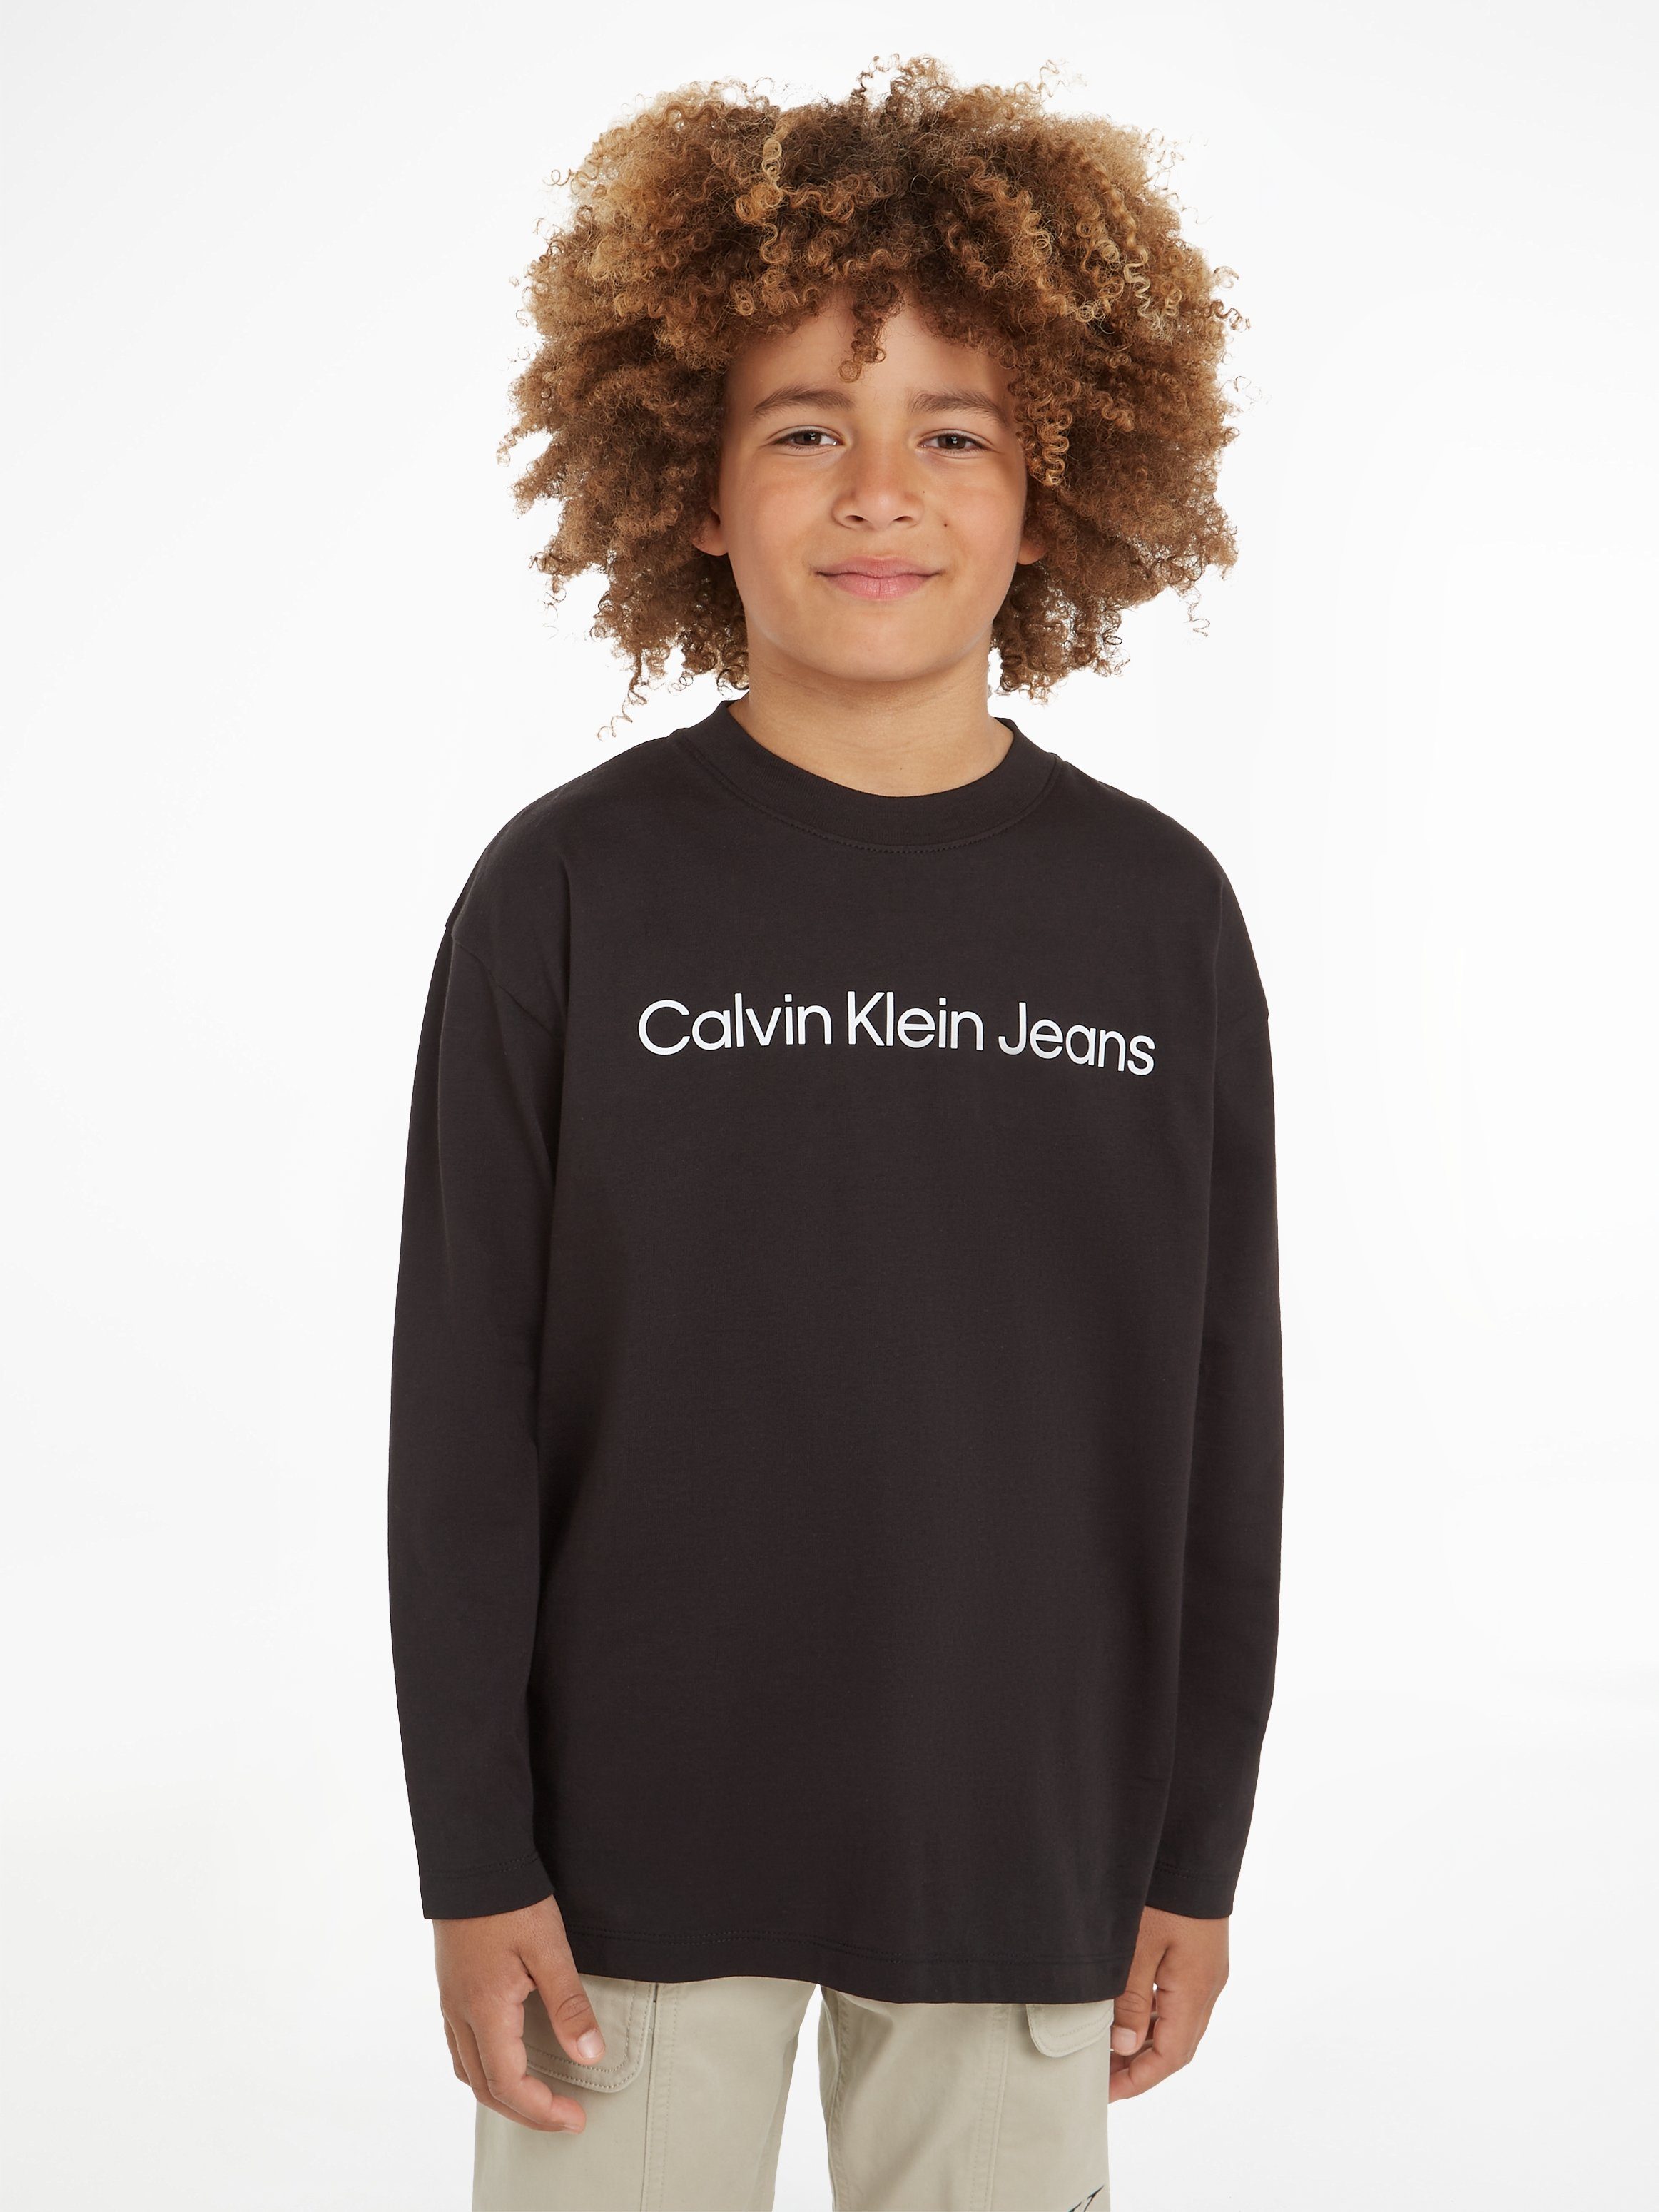 Calvin Klein Jeans Logodruck mit T-SHIRT RELAXED Langarmshirt LS INST. glänzenden LOGO